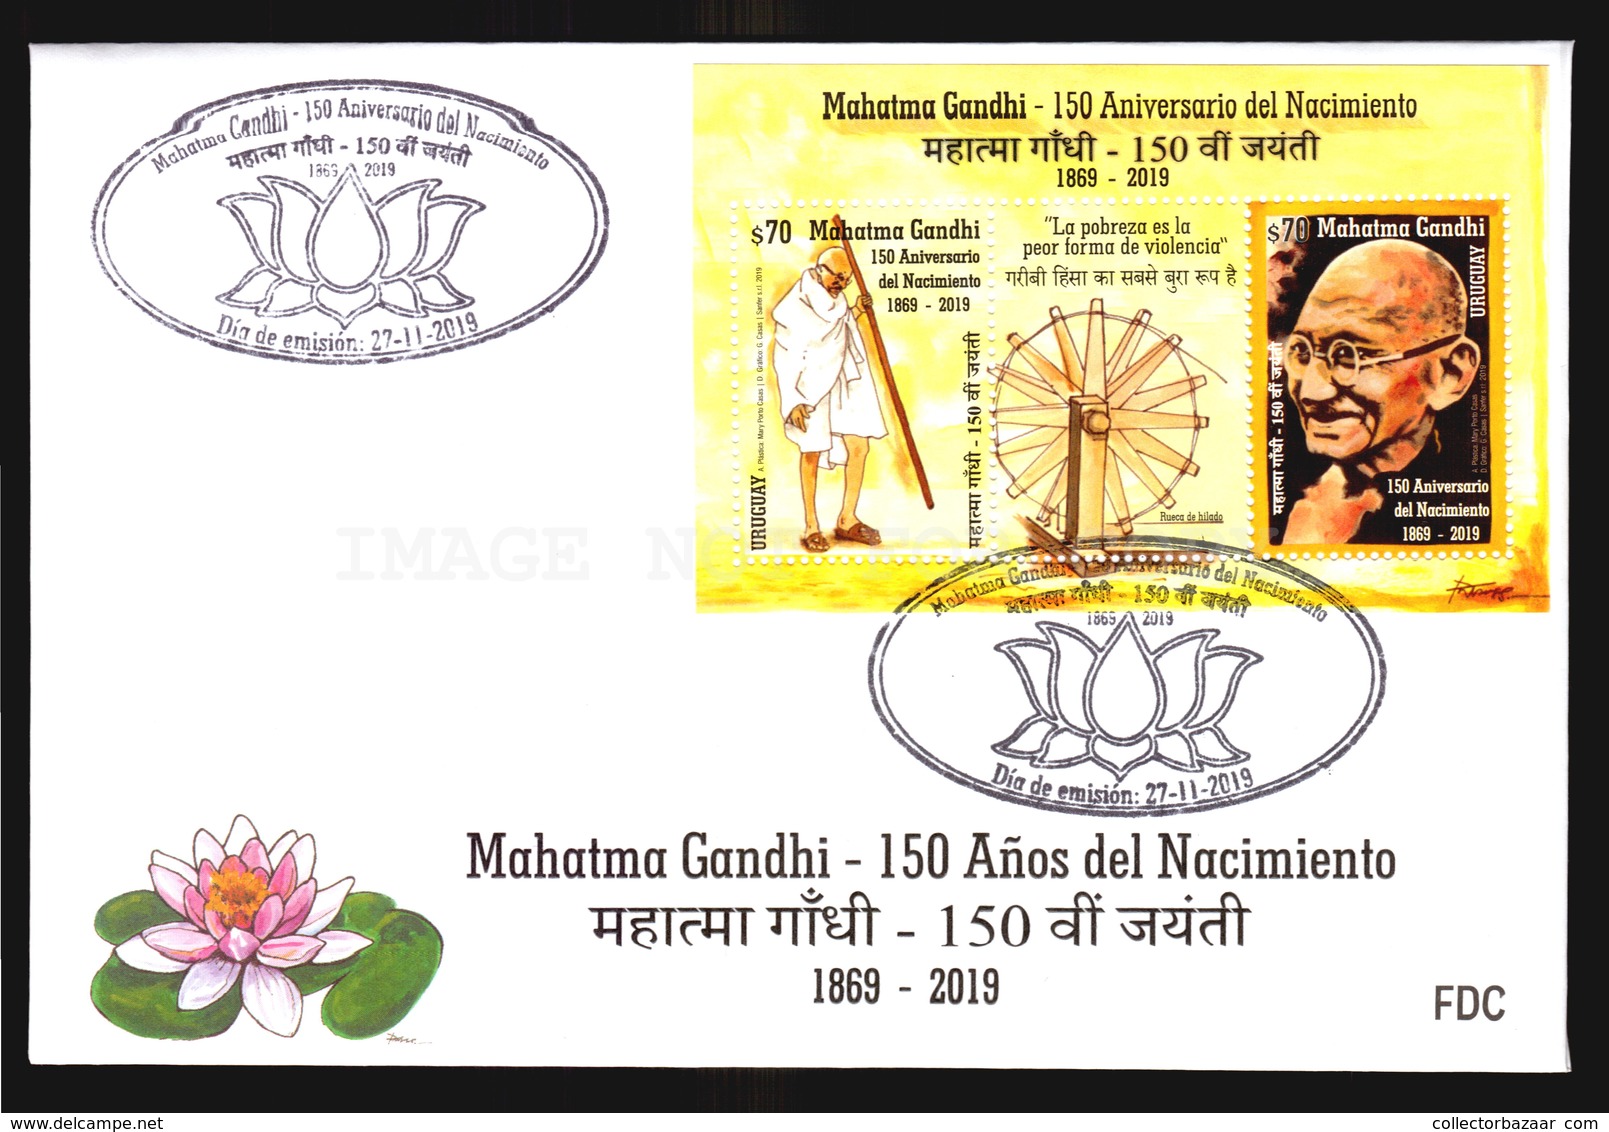 2019 URUGUAY -  FDC COVER ADDRESSED TO YOU ! - FREE SHIPPING -  Mahatma GANDHI - INDIA LEADER 150 BIRTH ANNIVERSARY - Mahatma Gandhi